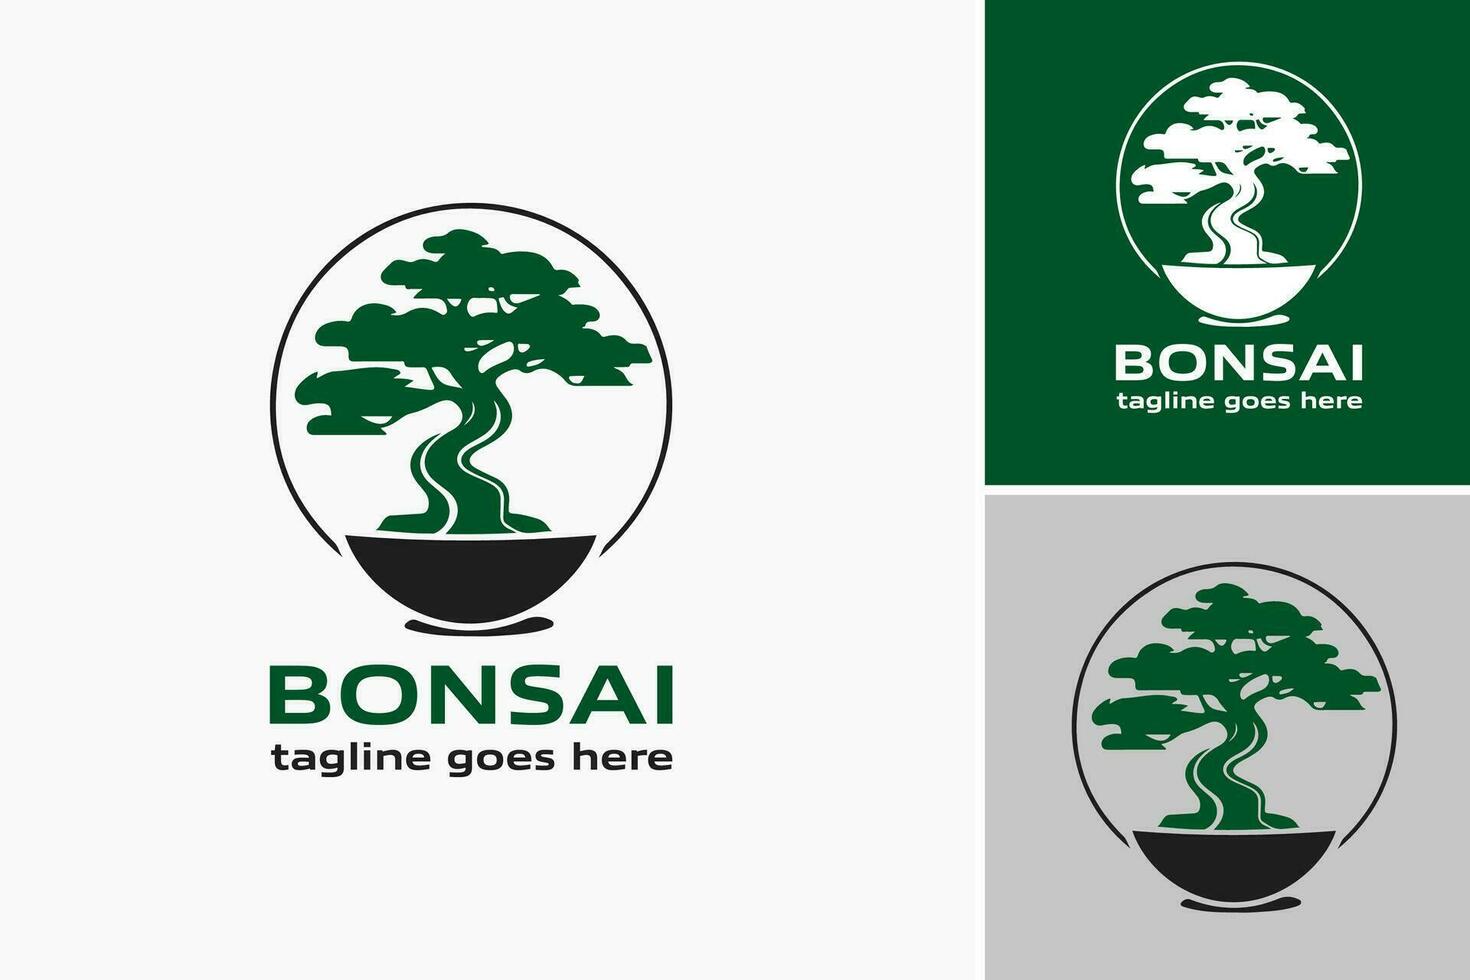 bonsai logo diseño se refiere a un diseño activo ese incorpora elementos de bonsai arboles en un logo. esta activo es adecuado para negocios o marcas relacionado a naturaleza, jardinería, relajación vector